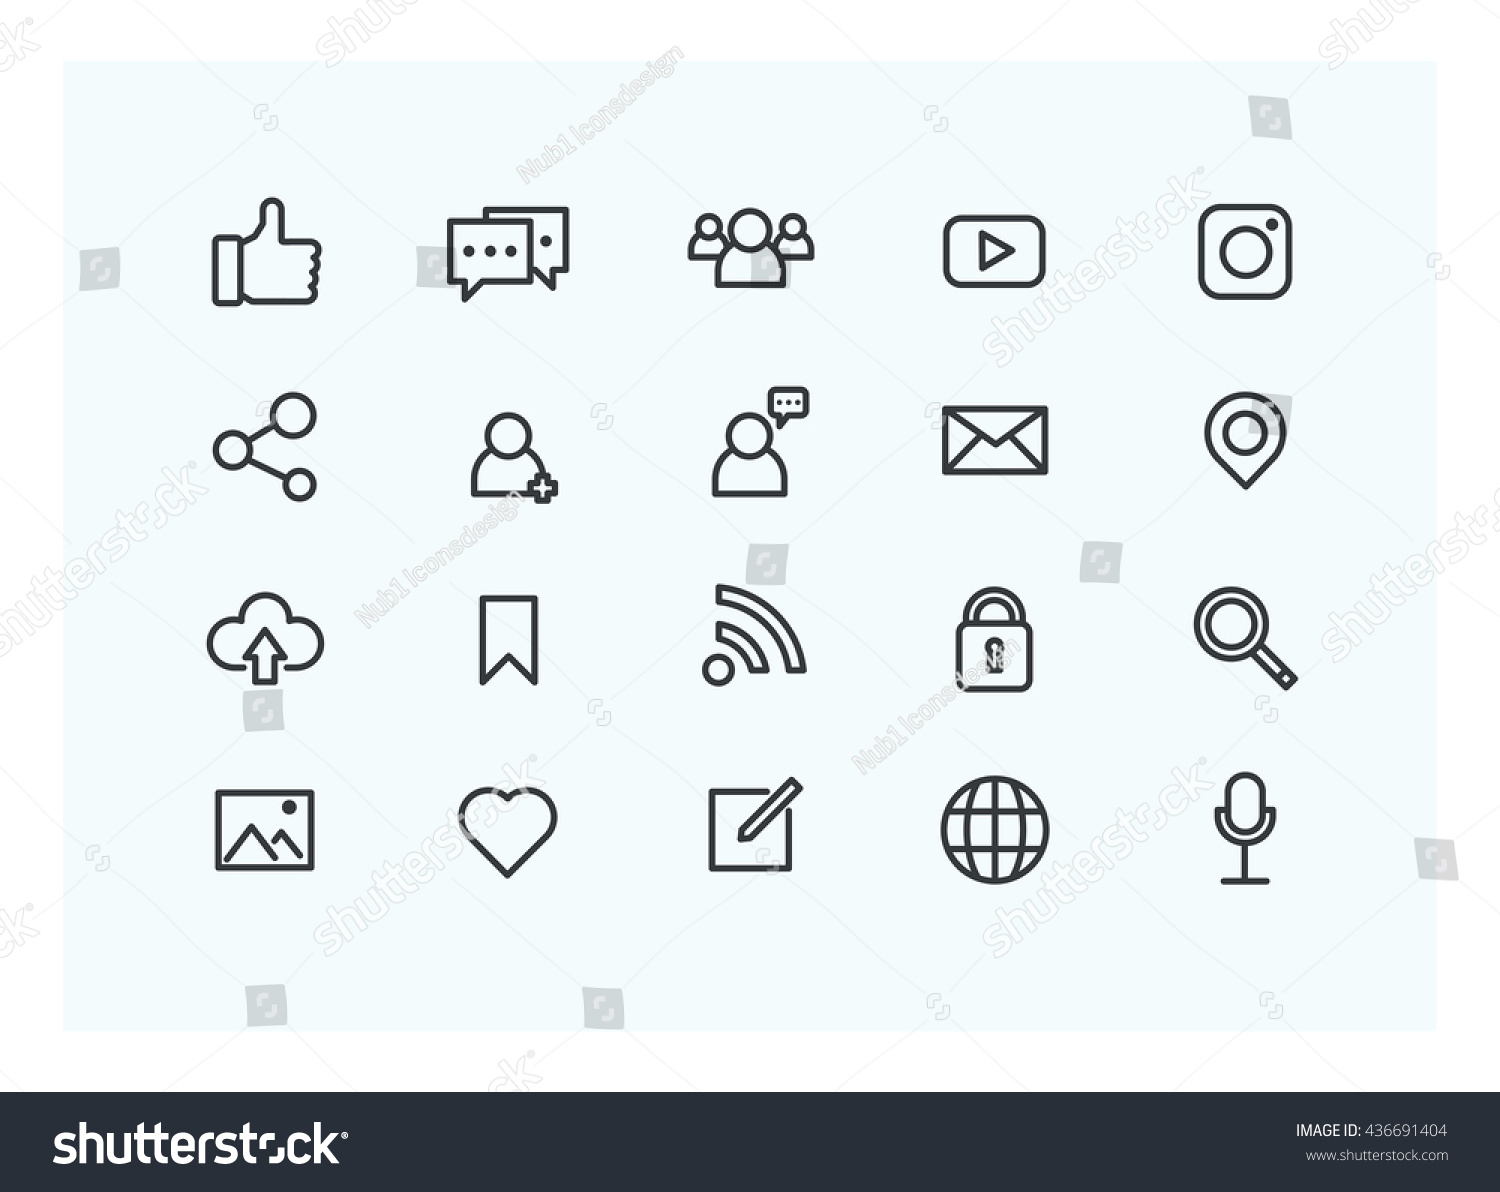 Social Icon Set Vector. - 436691404 : Shutterstock